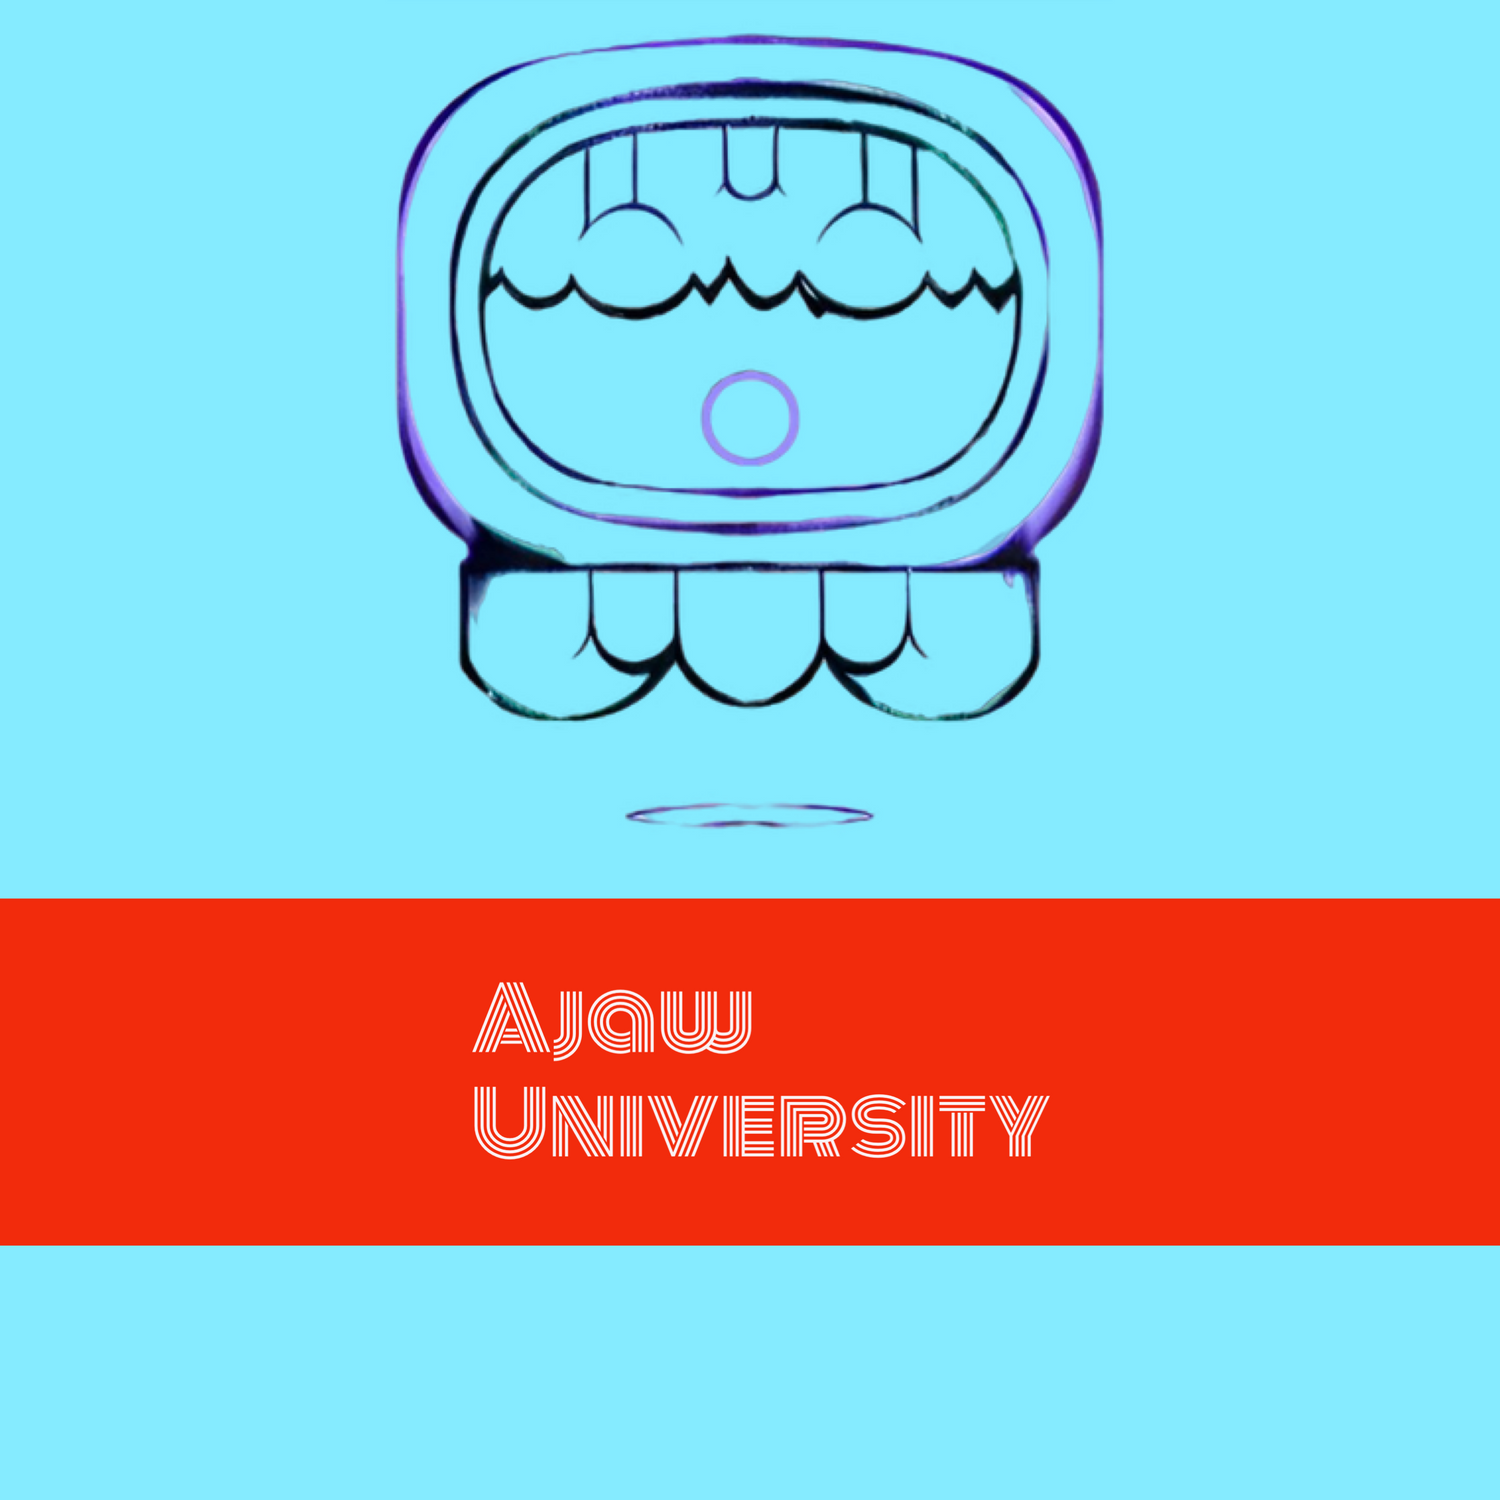 AJAW University